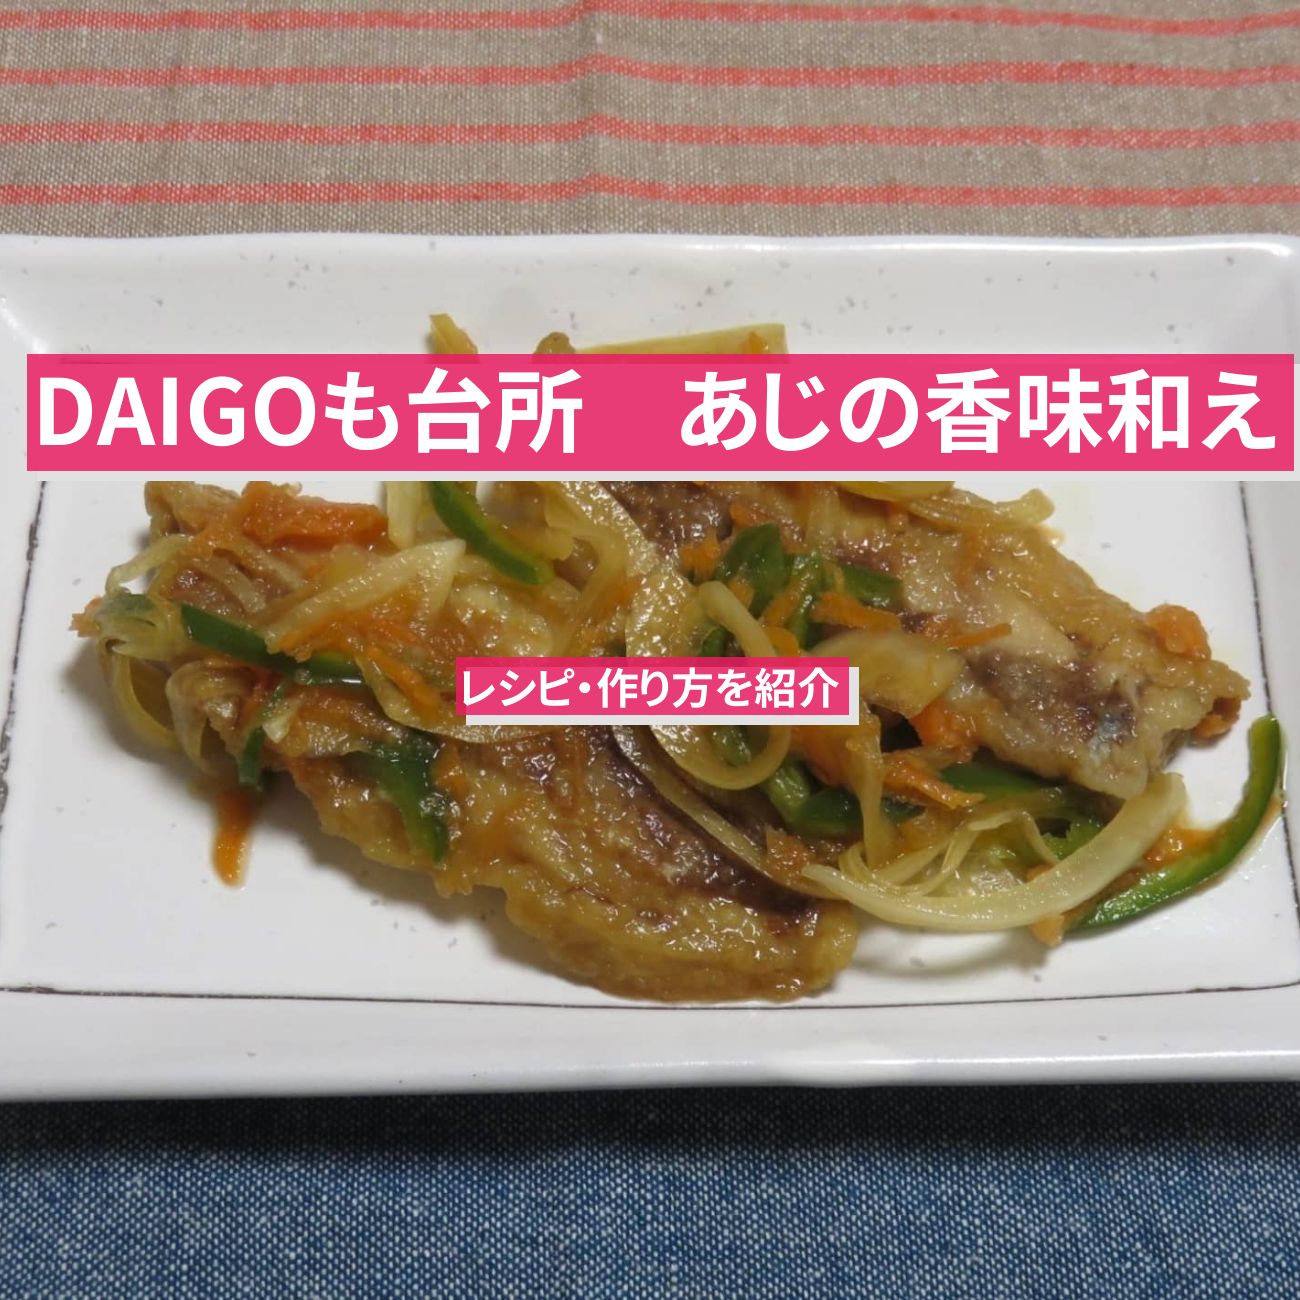 【DAIGOも台所】『あじの香味和え』のレシピ・作り方を紹介〔ダイゴも台所〕